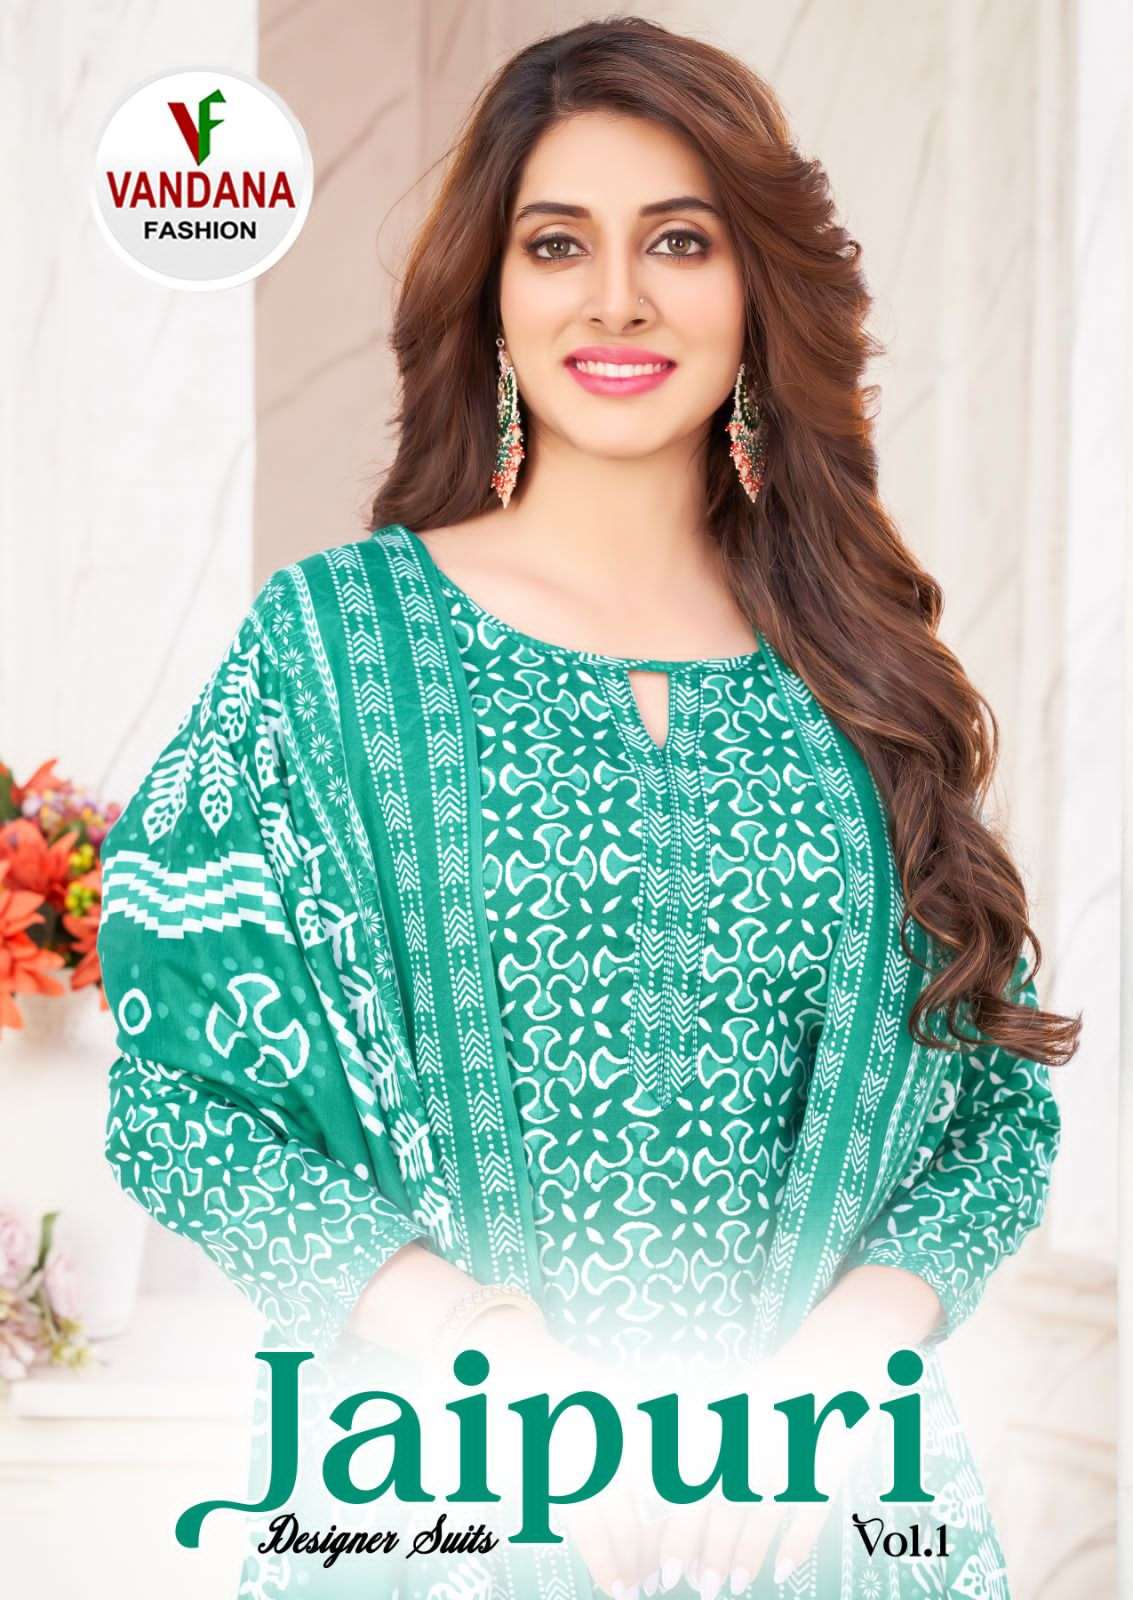 vandana fashion jaipuri vol-1 1001-1012 series pure cotton designer salwar kameez catalogue latest collection surat